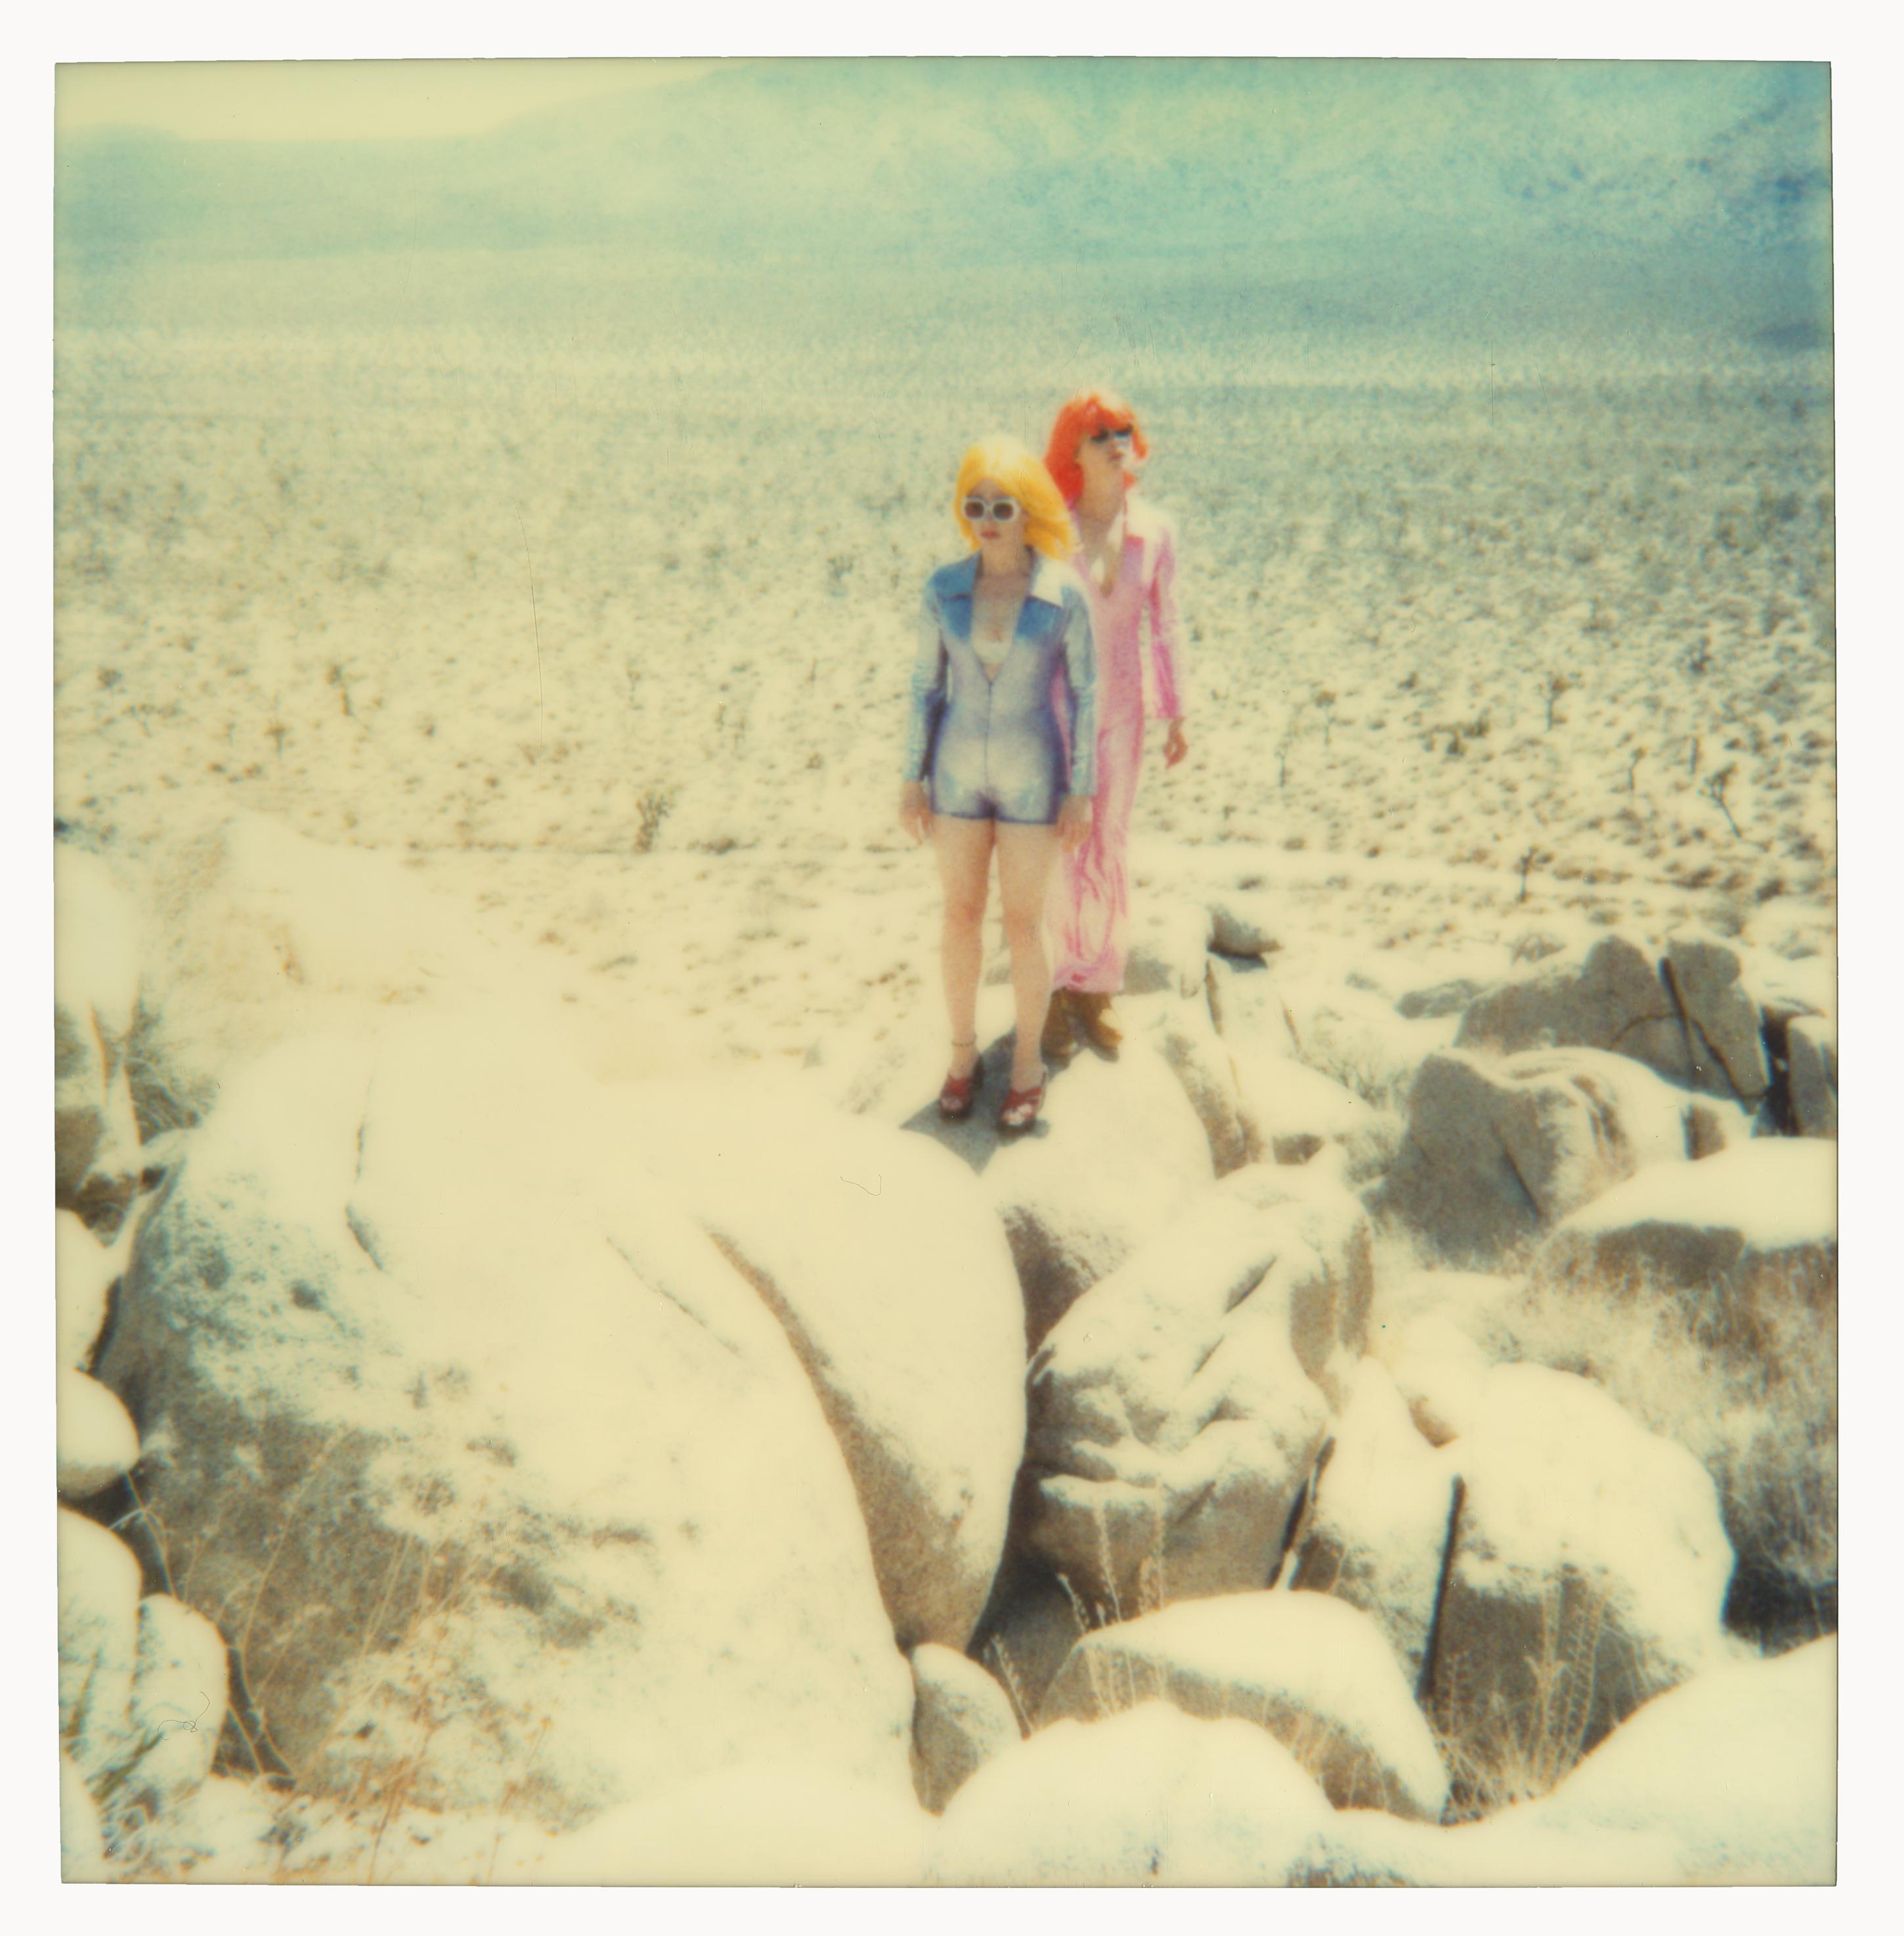 Stefanie Schneider Landscape Photograph - On the Rocks (Long Way Home), analog, 58x57cm, Edition 2/10